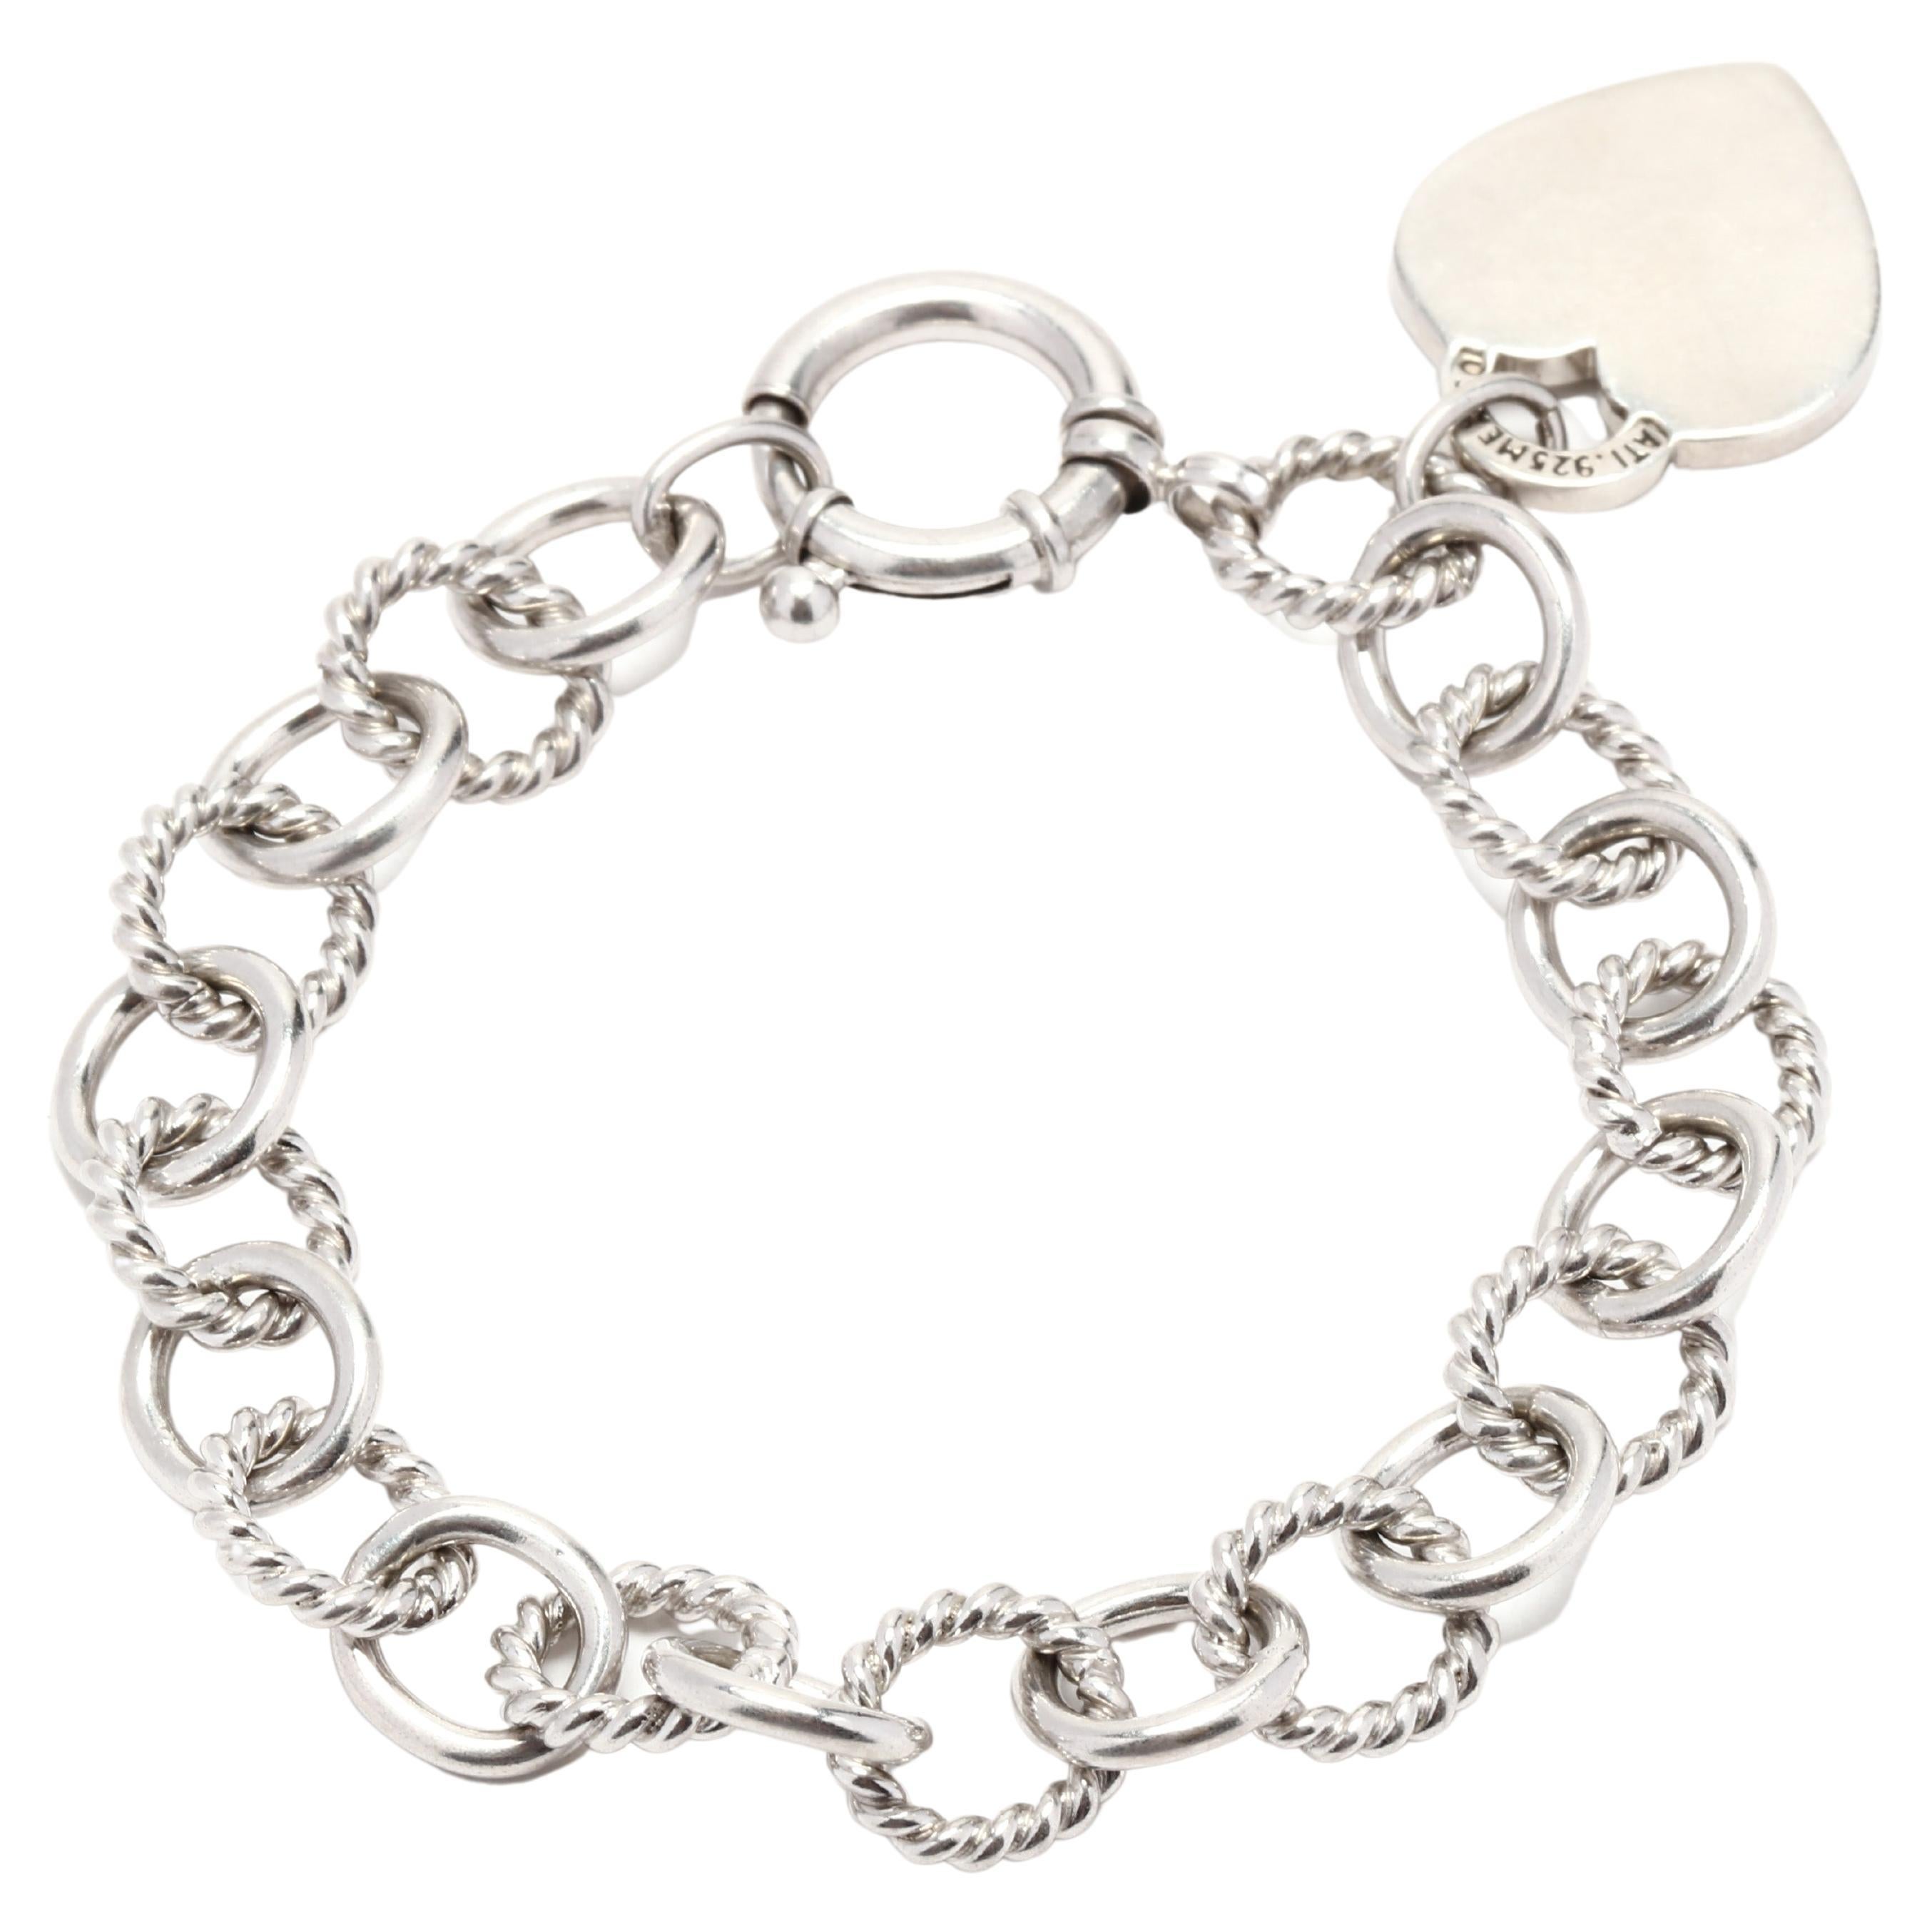 Oval Link Heart Charm Bracelet, Sterling Silver, Length 7.25 Inch